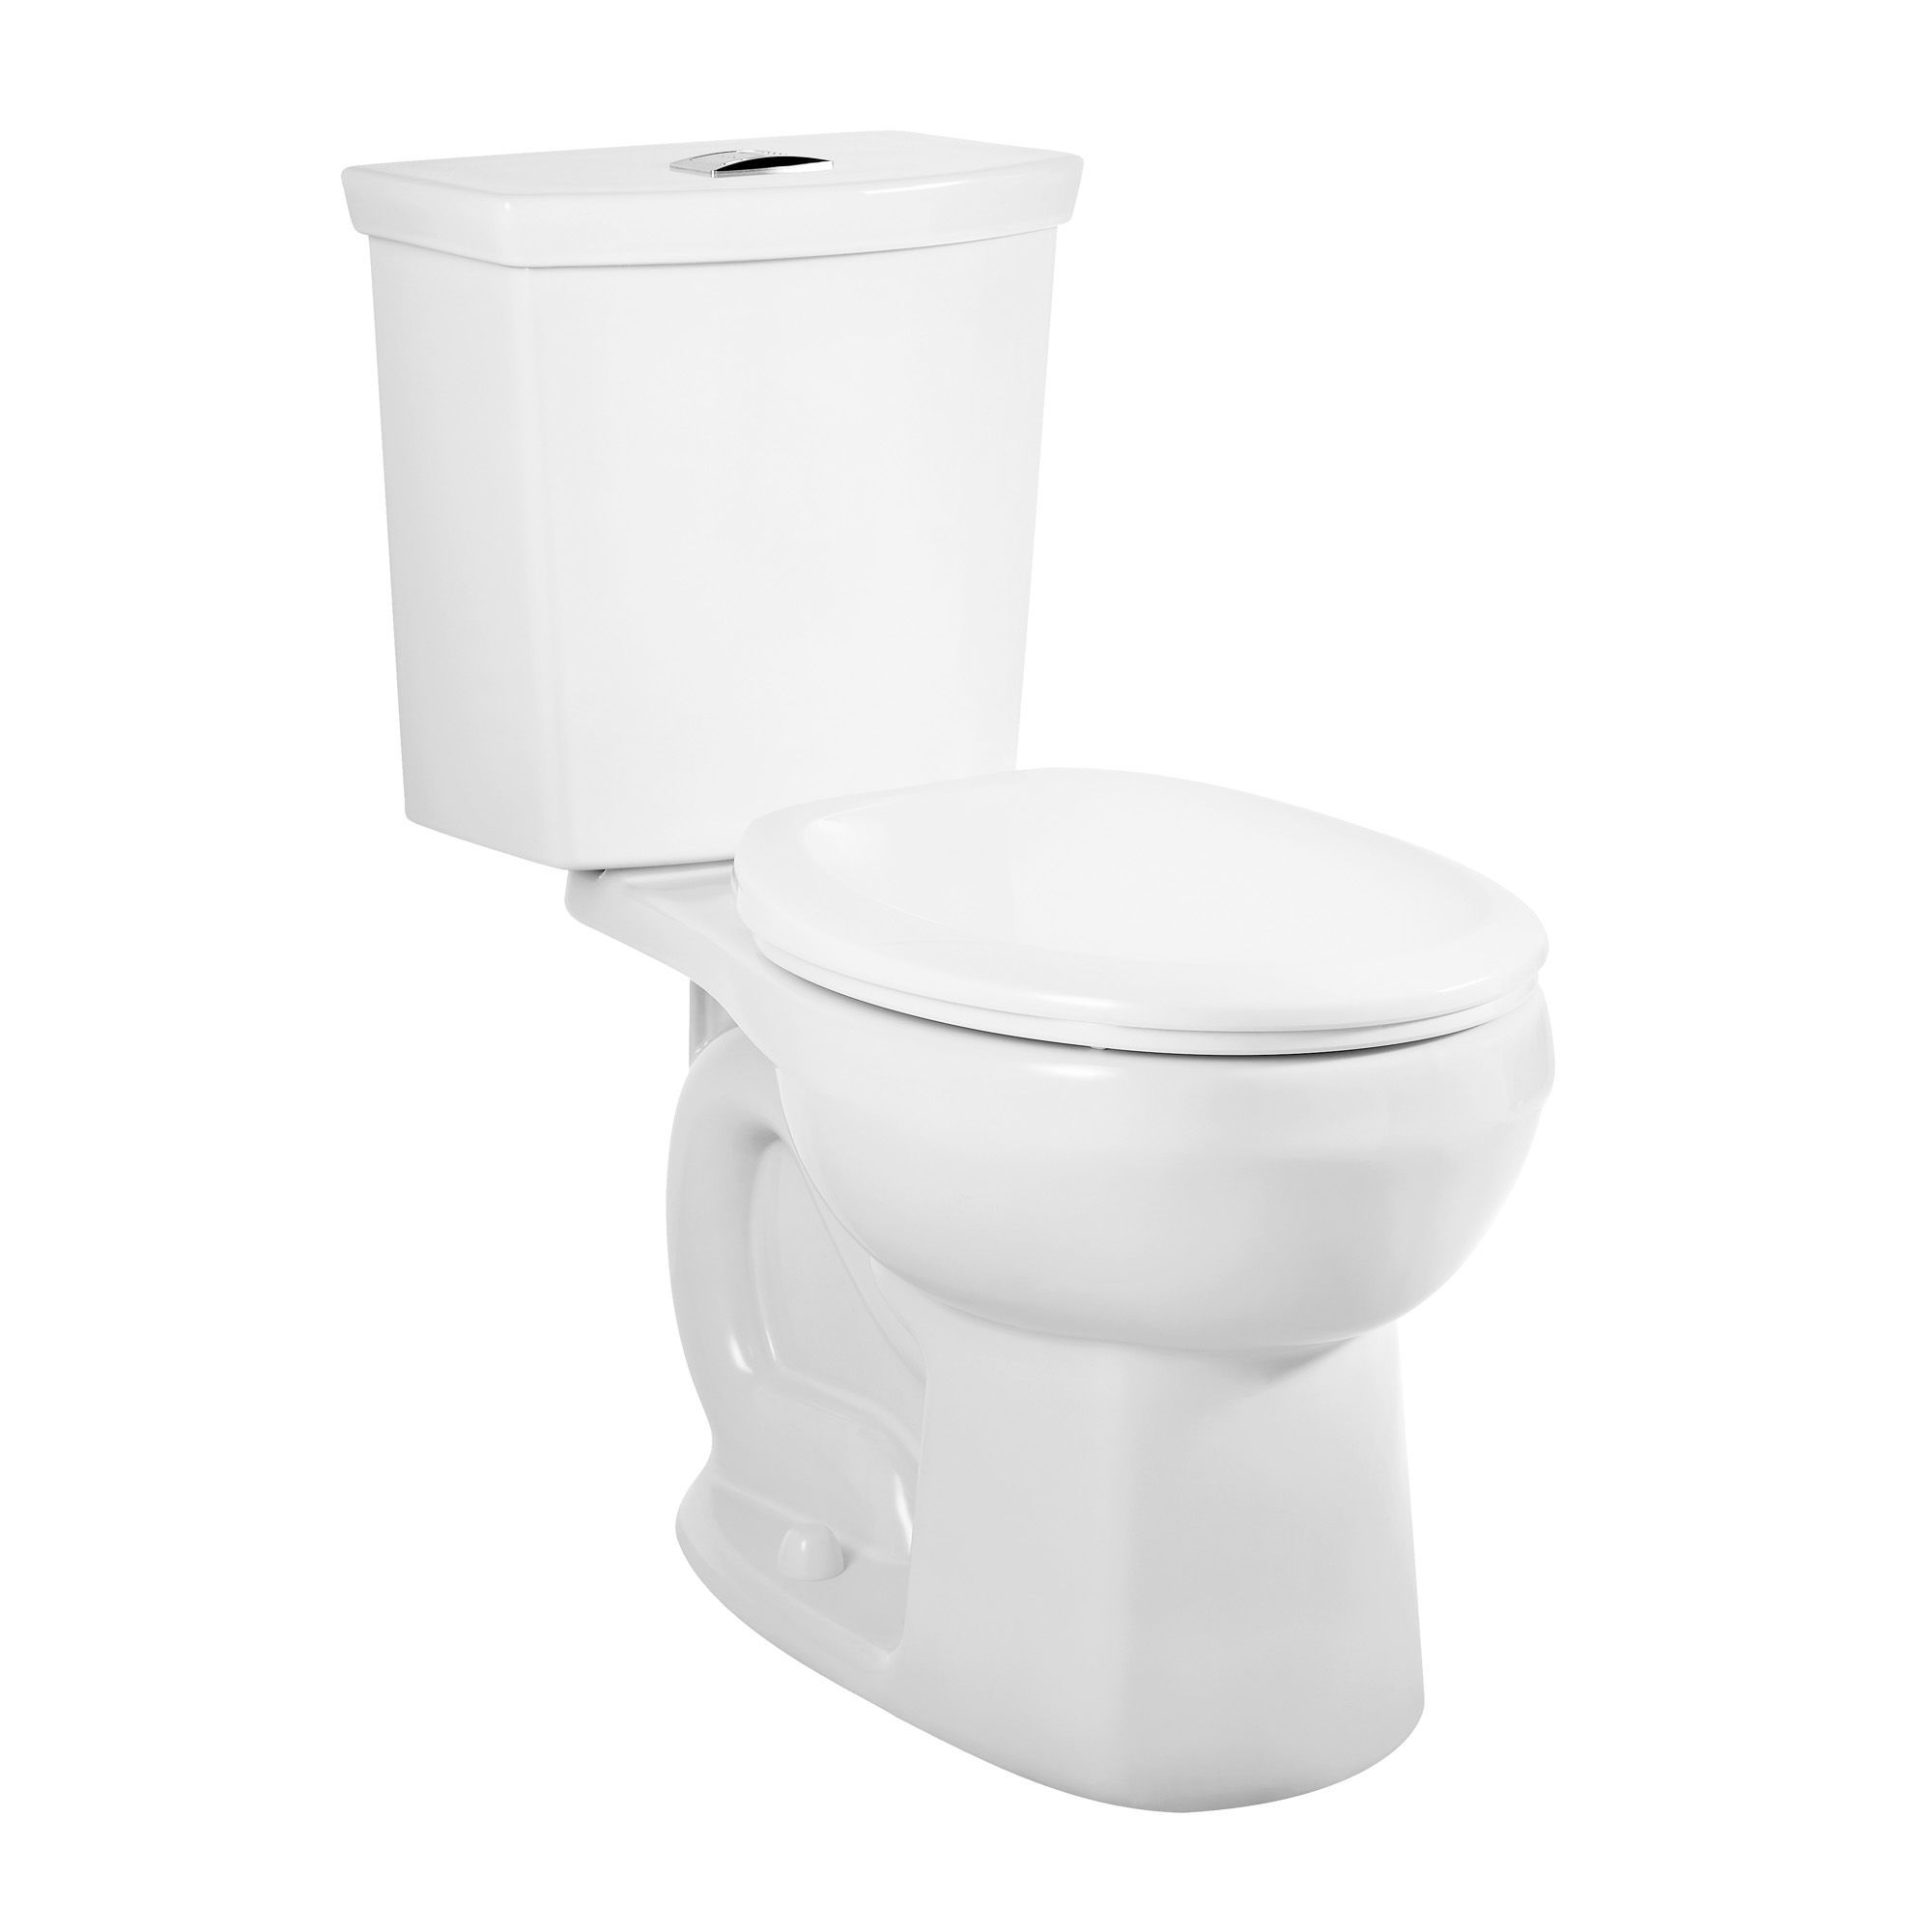 Toilette cuvette allongée Ravenna 3 par American Standard, 2